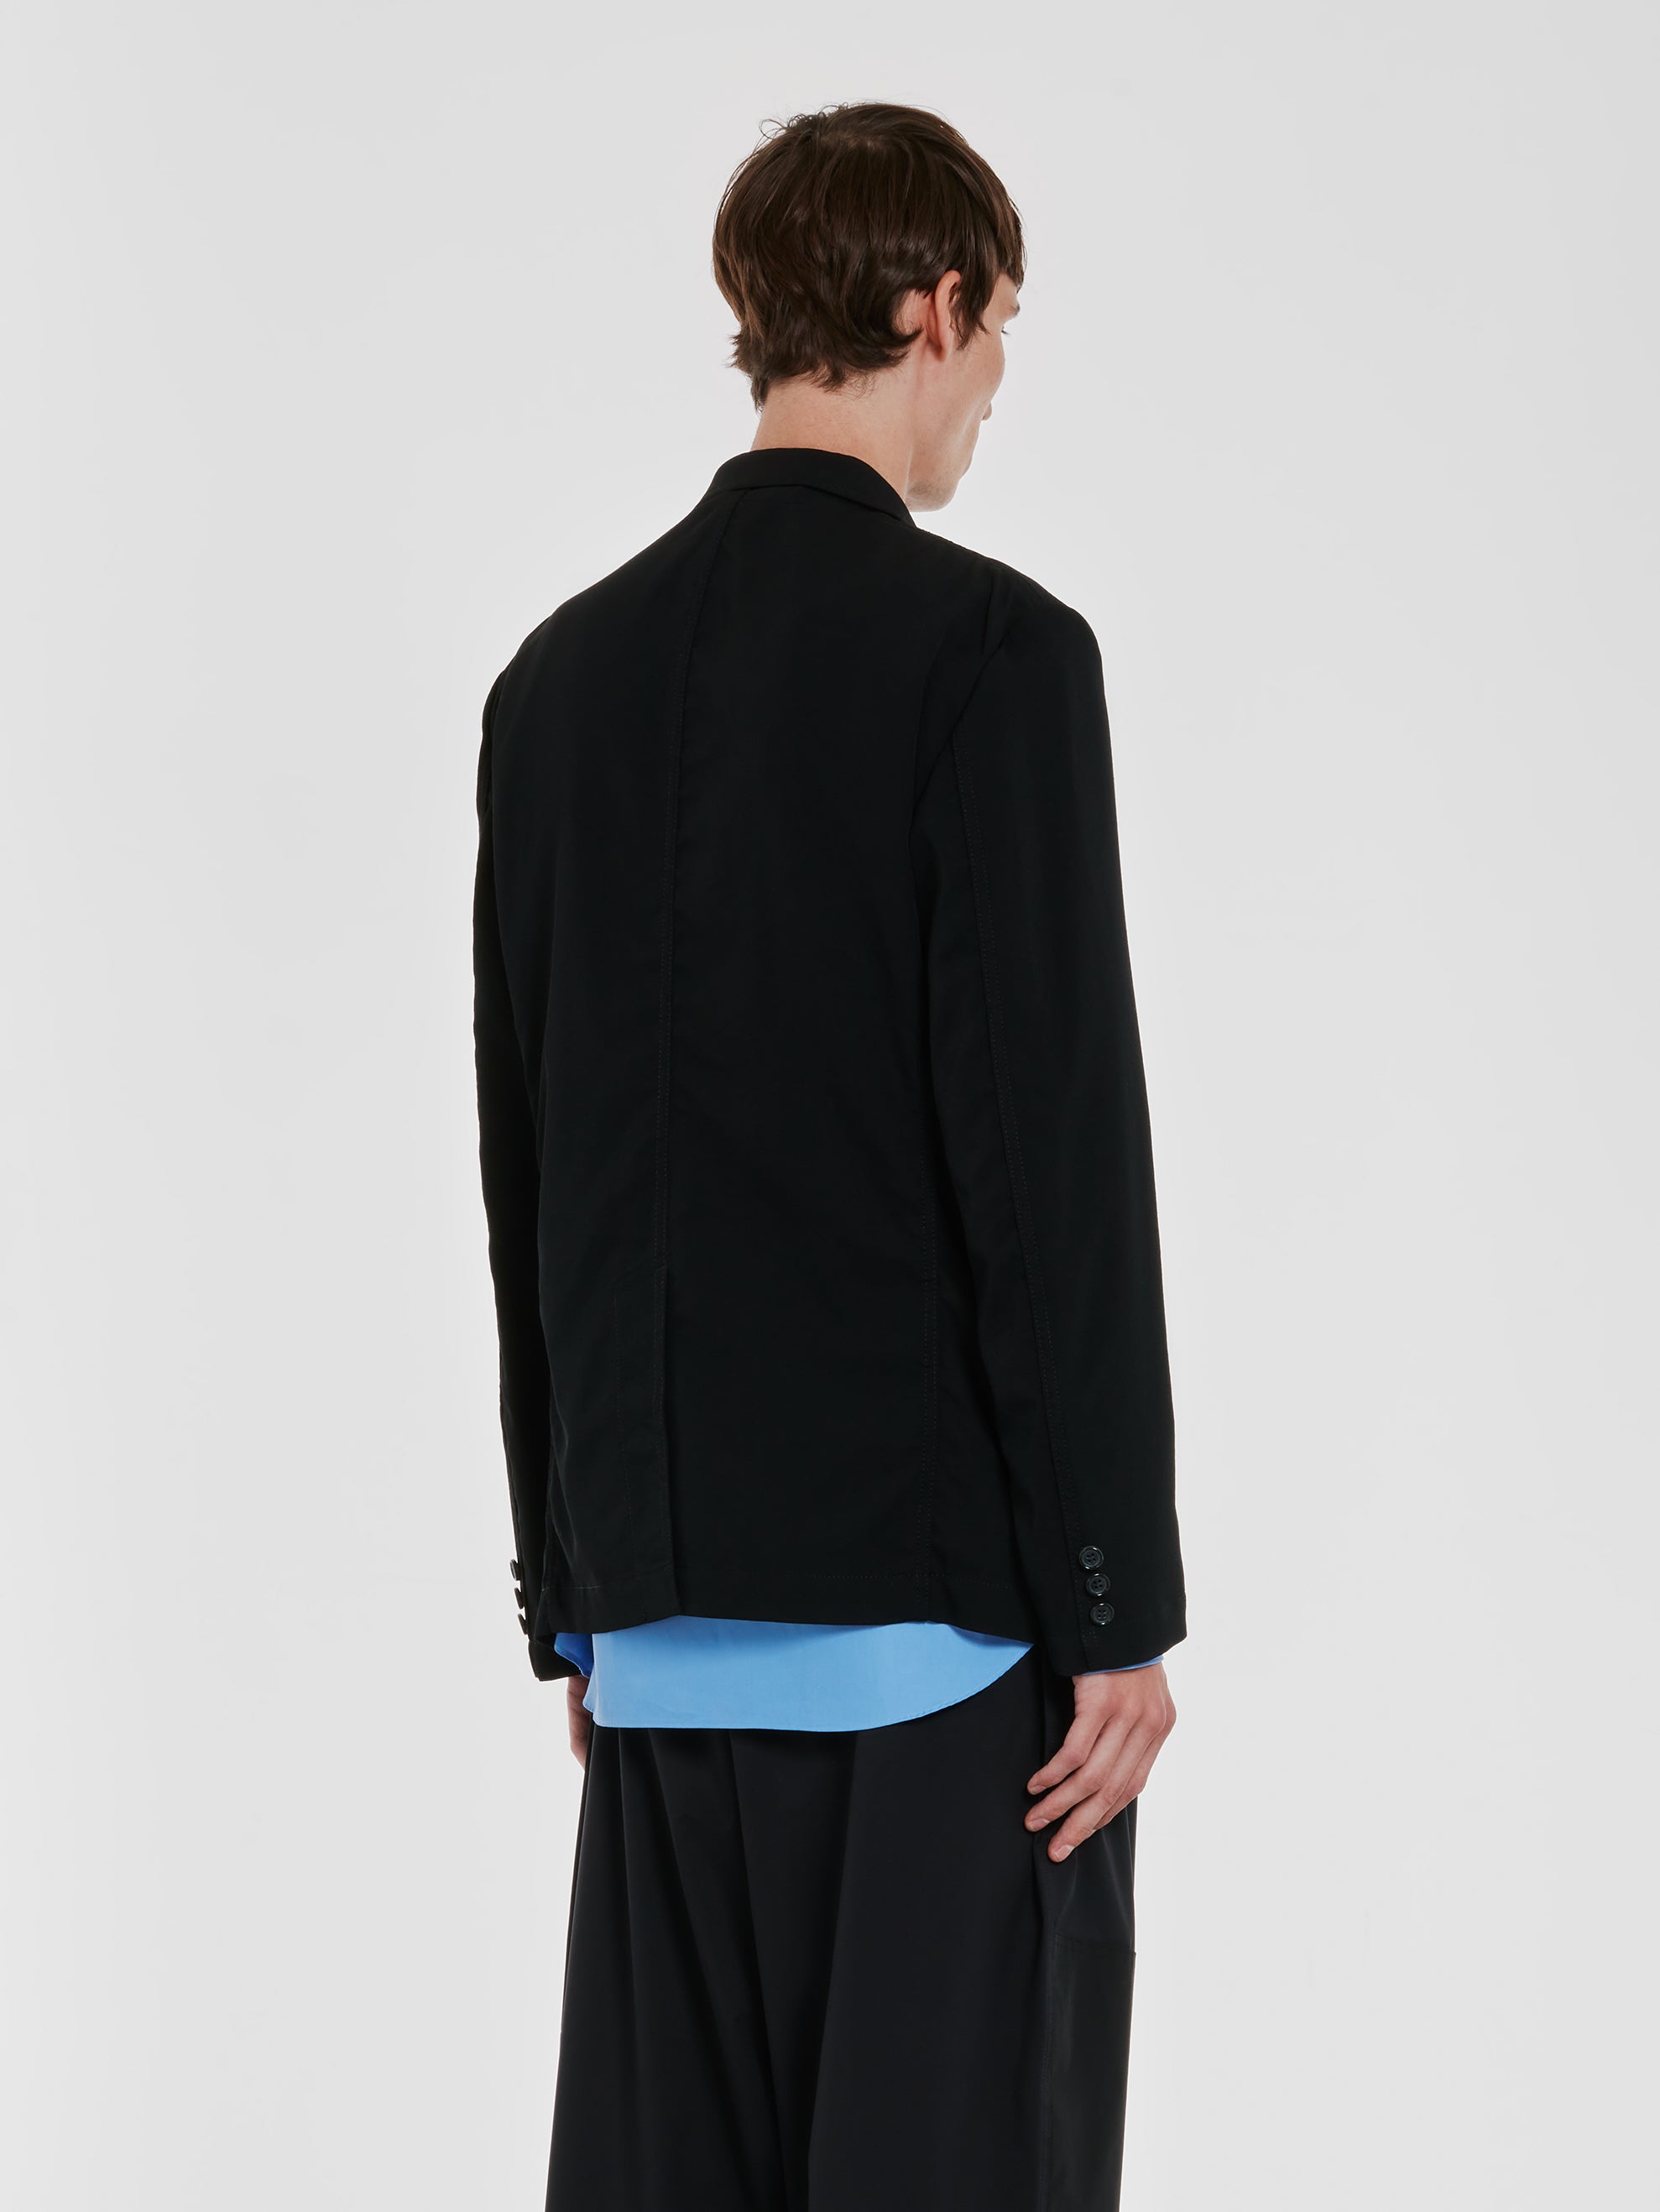 Comme des Garçons Homme - Men’s Wool Gabardine Tailored Jacket - (Black) view 3